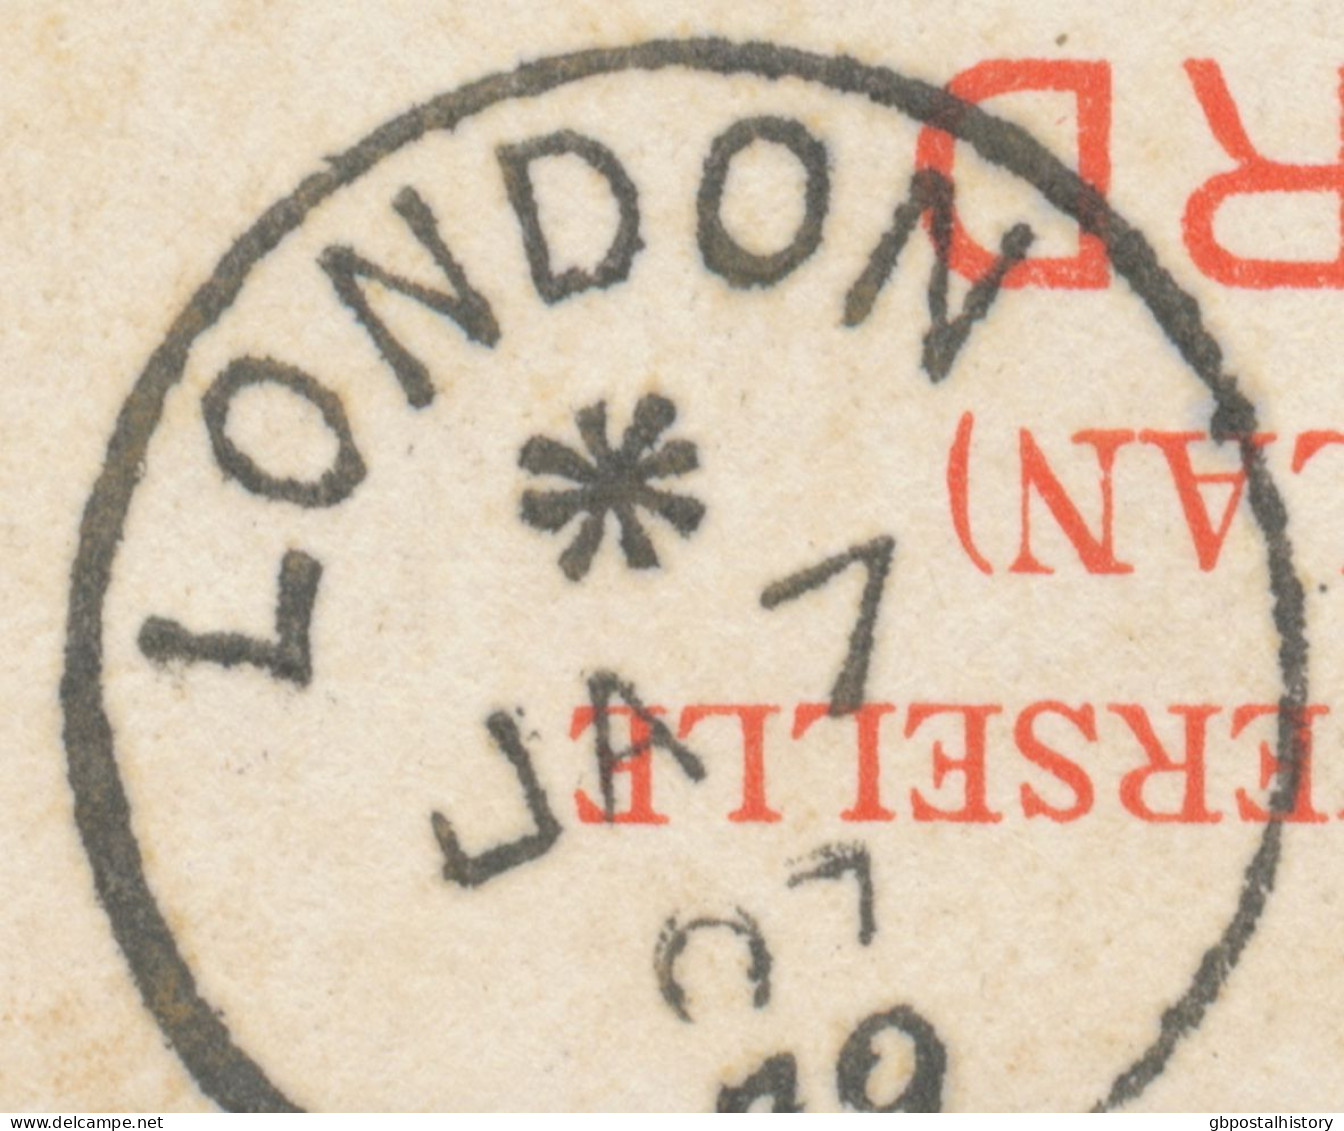 CEYLON / GB VILLAGE POSTMARKS 1907 CDS 22mm MIS-SORT Arrival Postmark (CBP 9/16) LONDON / 79 On Postcard From Ceylon Bat - Storia Postale